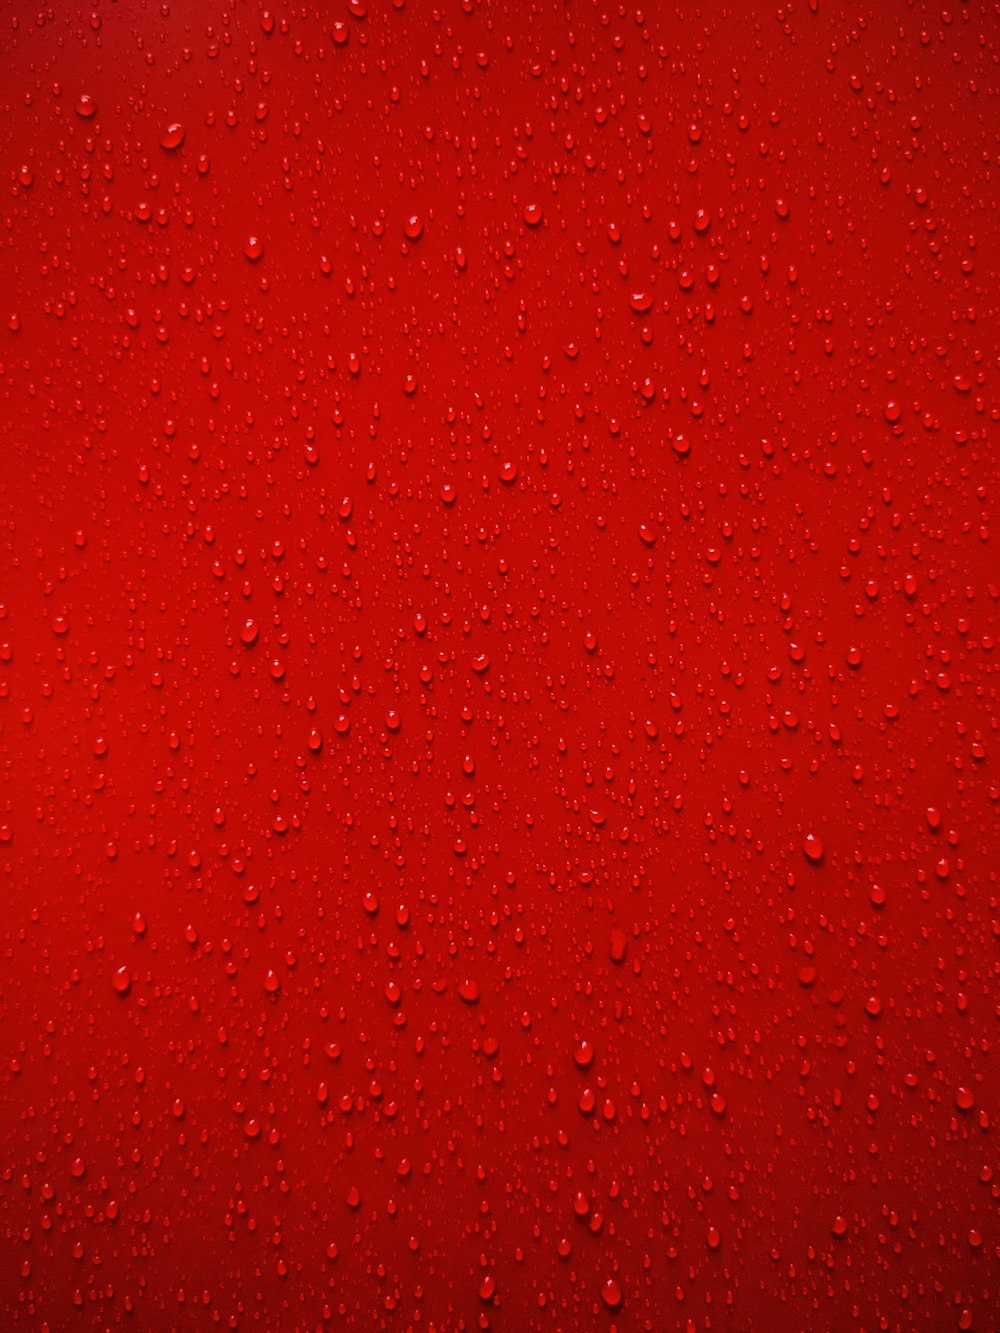 900+ Red Background Images: Download HD Backgrounds on Unsplash